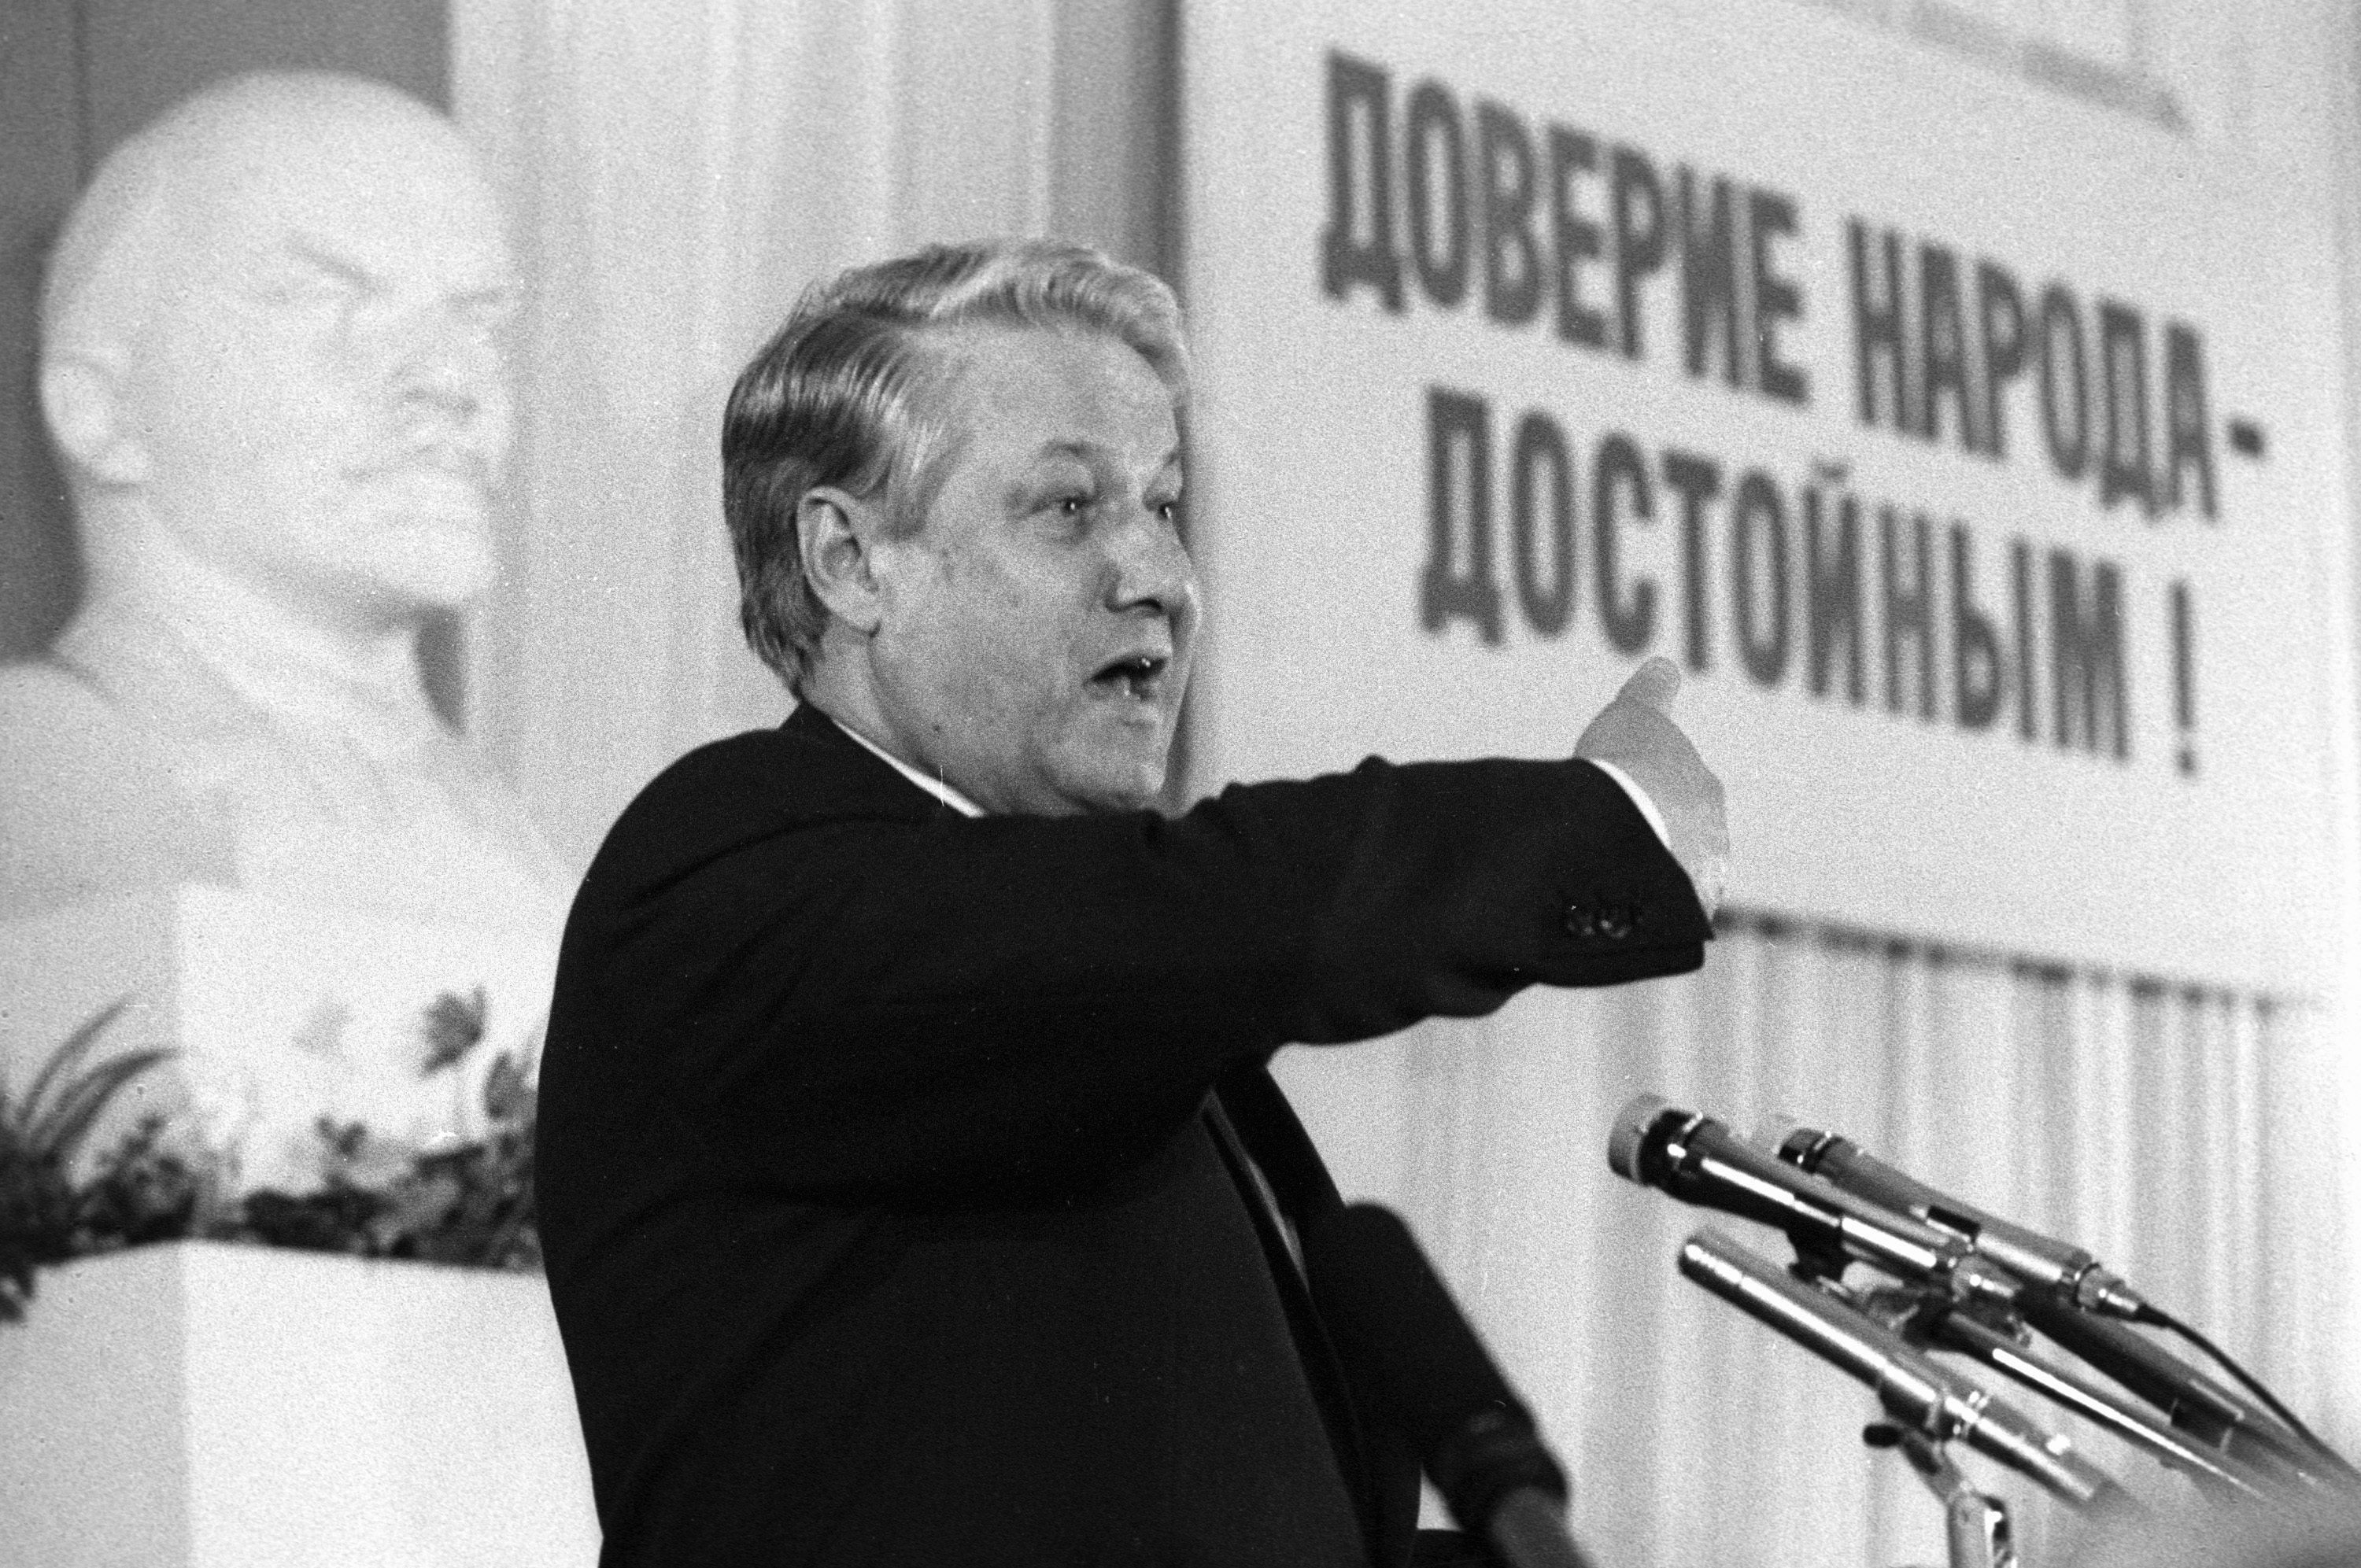 Boris Jelzin